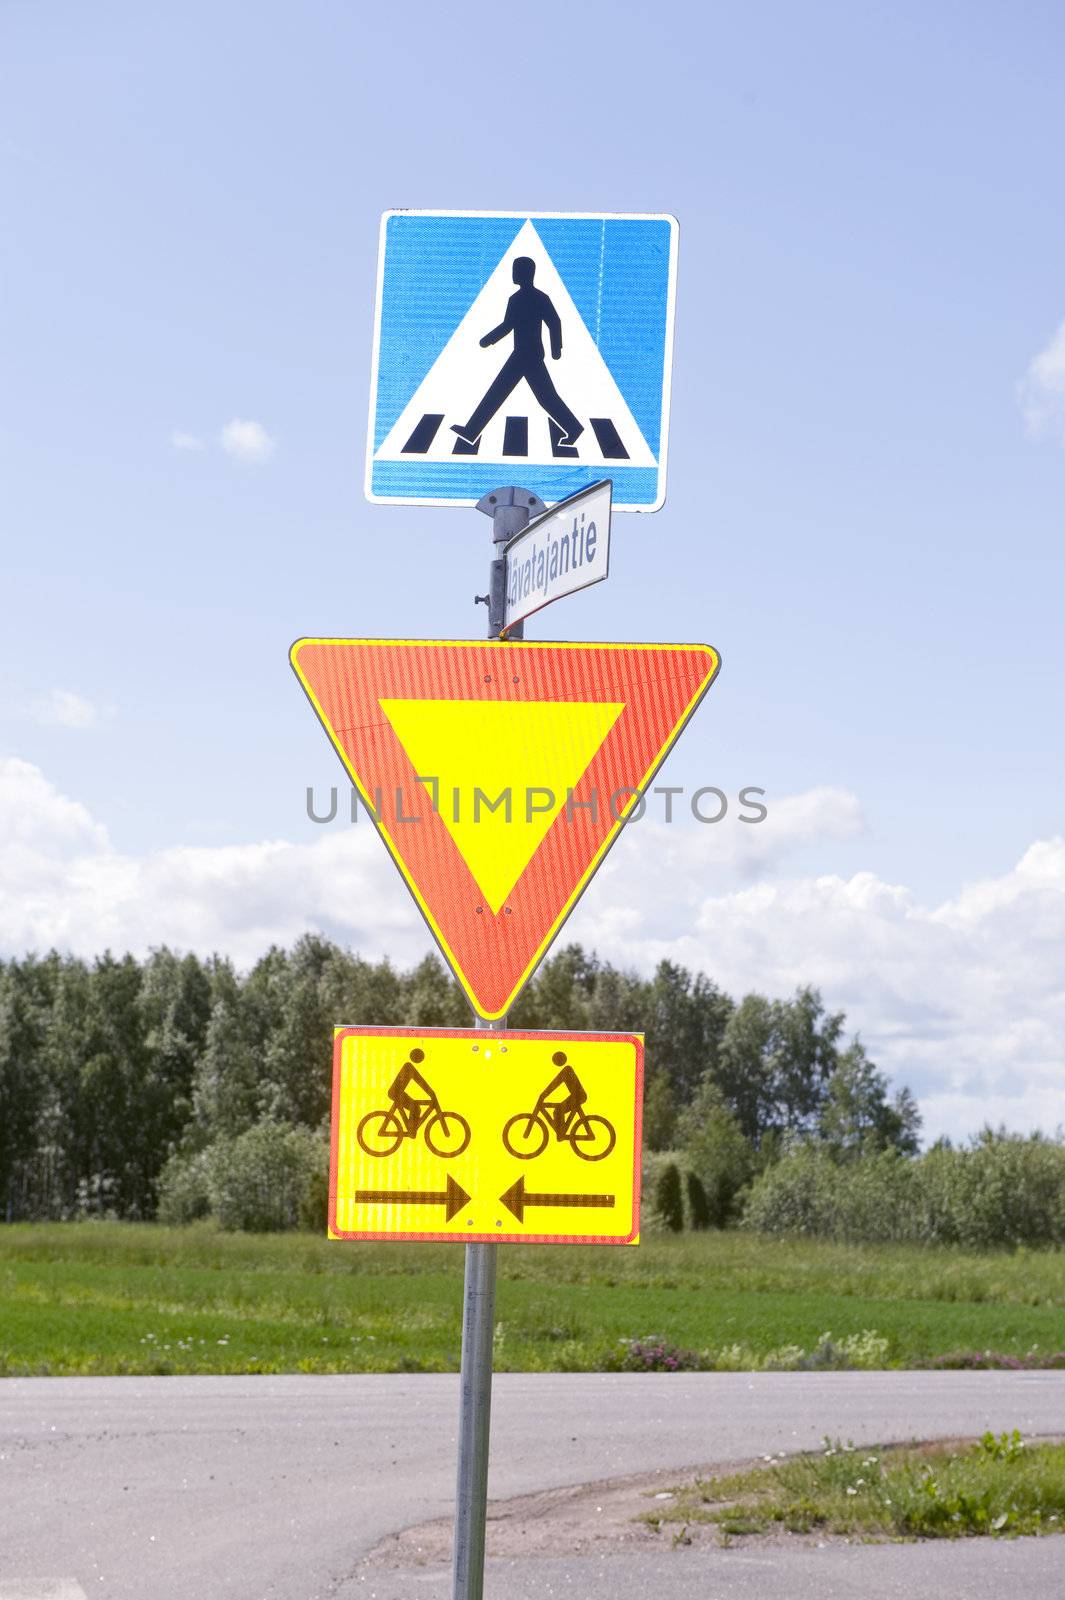 Crossroad traffic sign by Alenmax